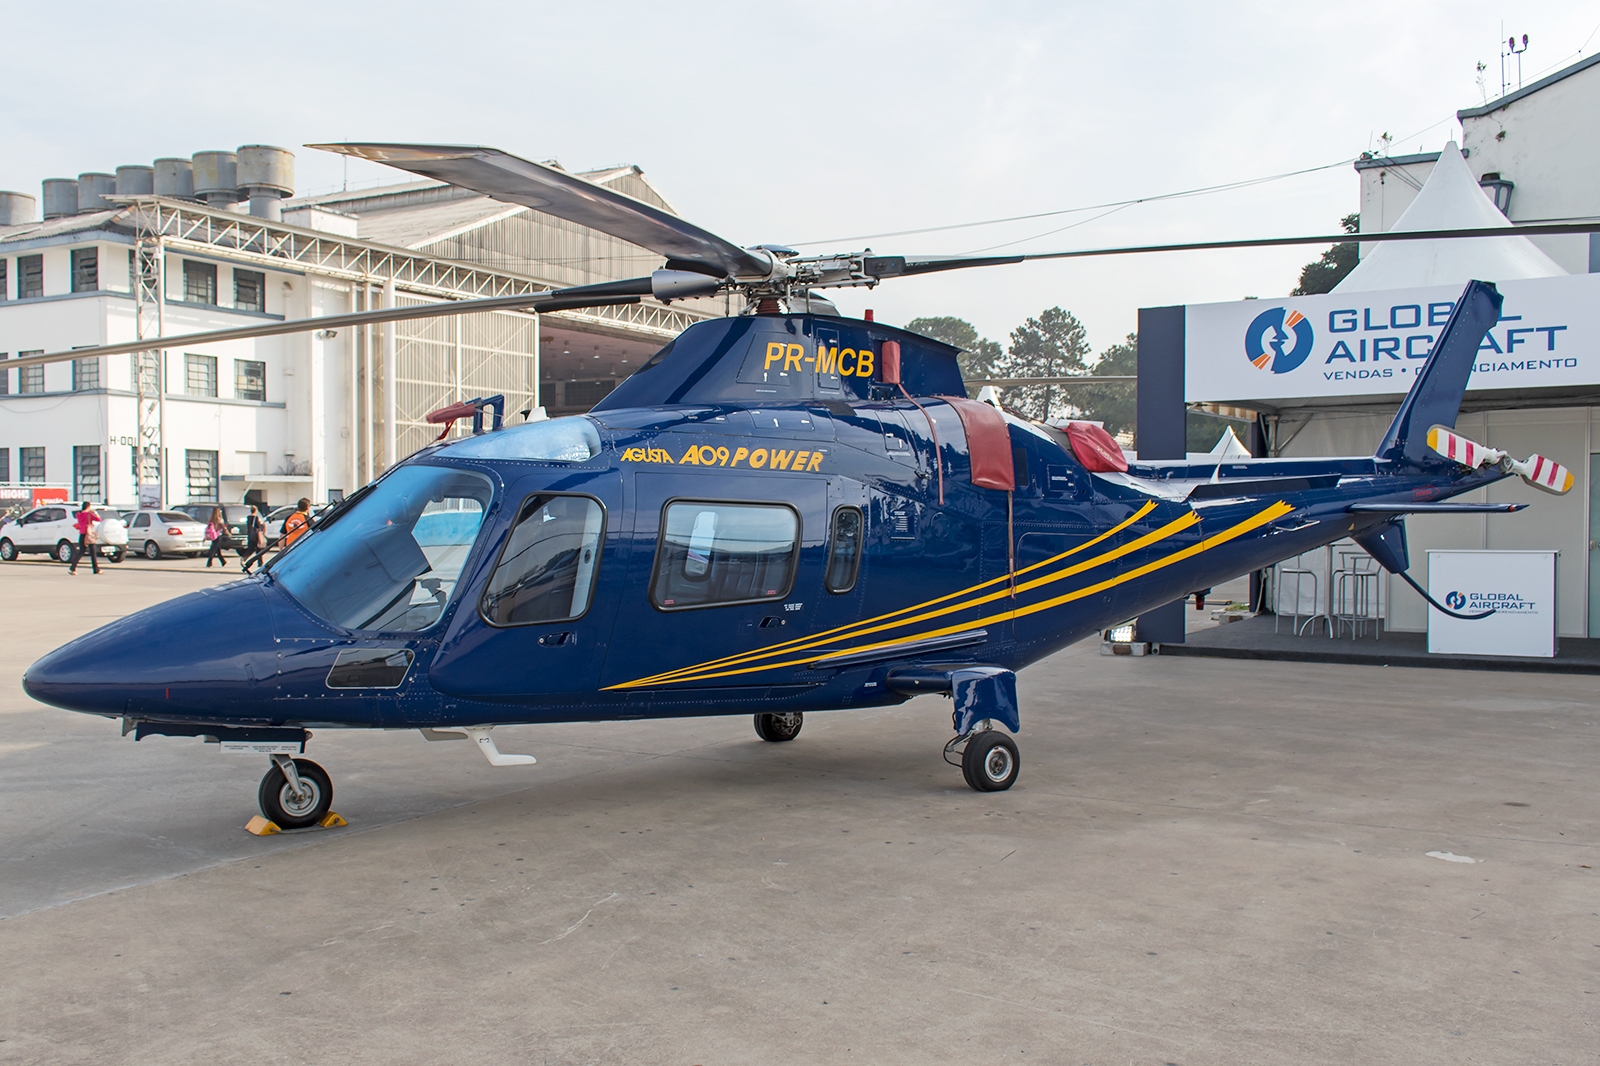 PR-MCB - Agusta A109 Power